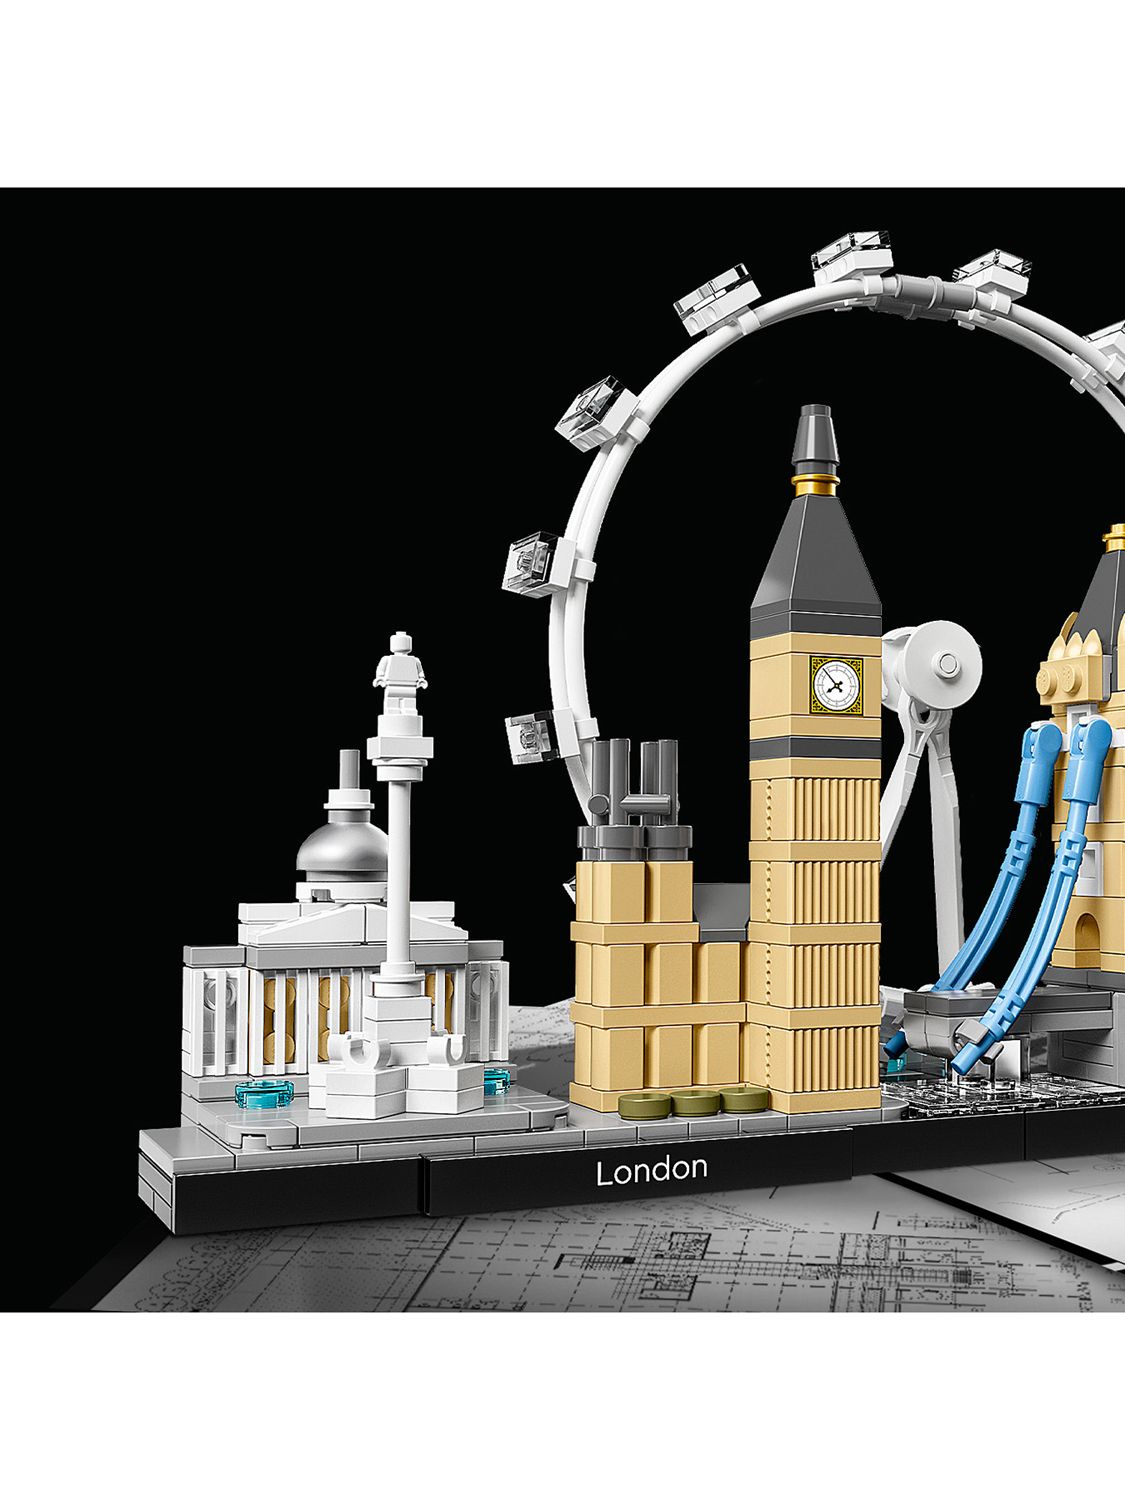 Lego Architecture London 21034 Skyline COMPLETE w/box & Instruction Manual